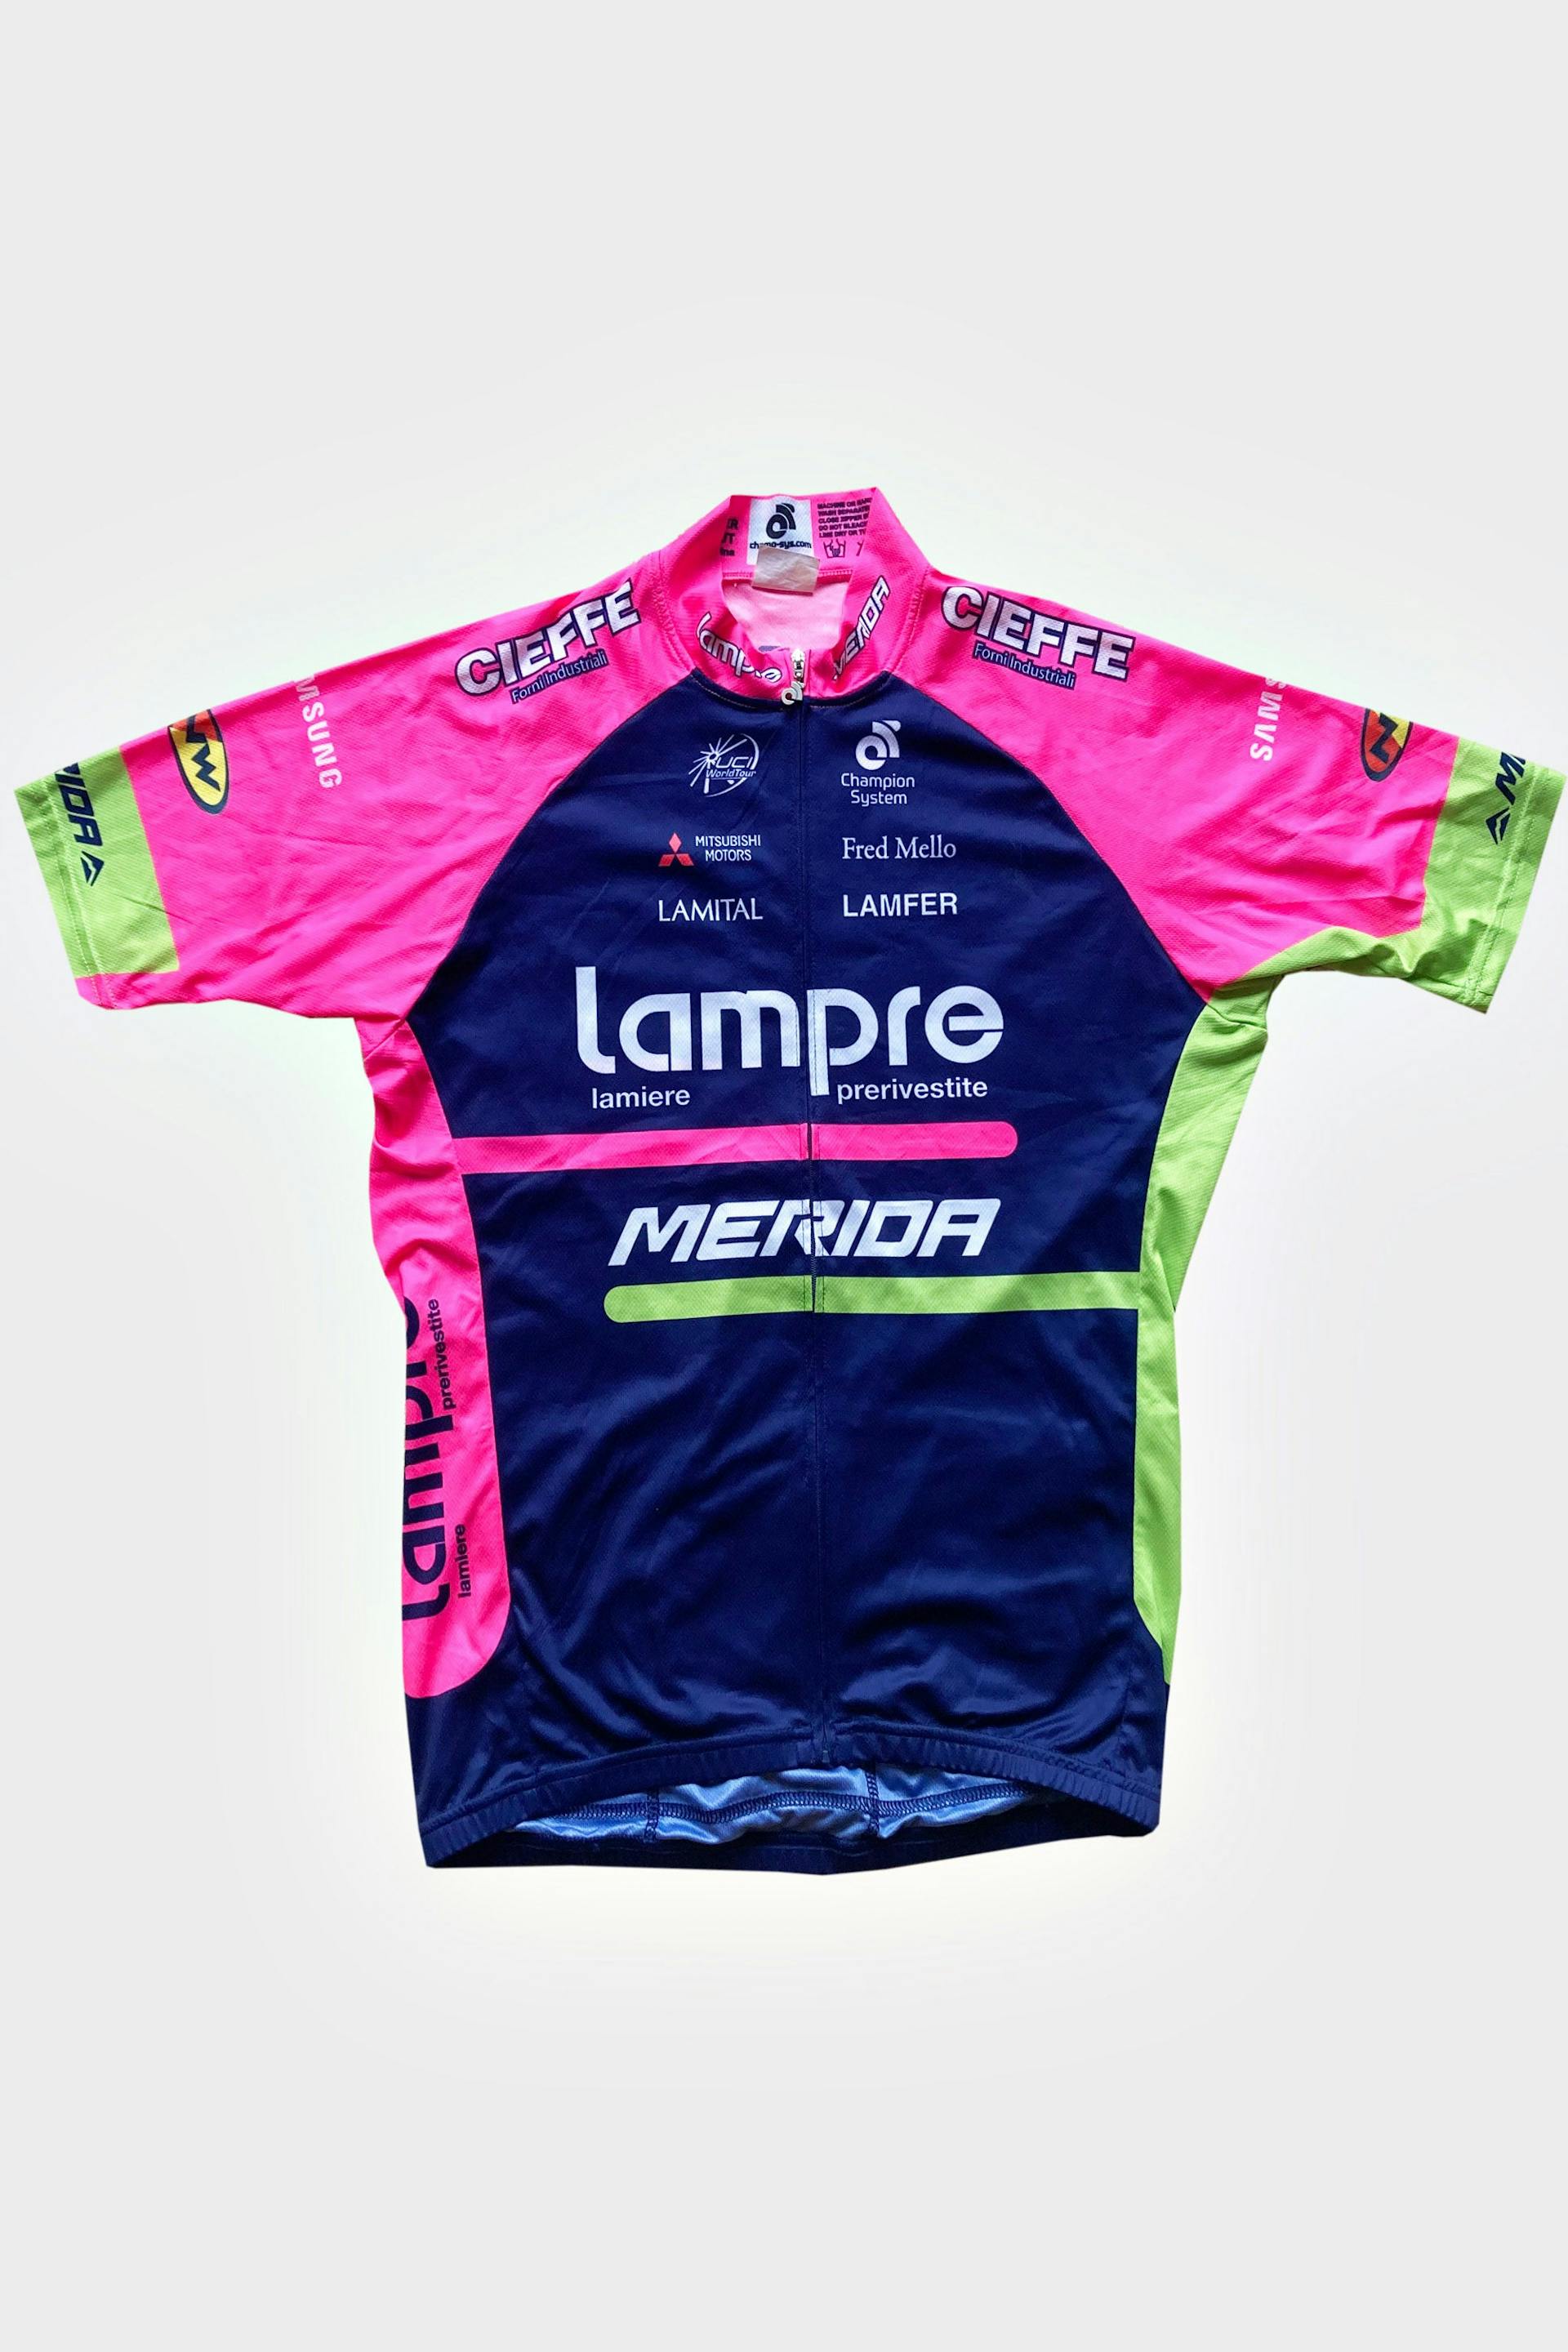 Lampre Merida Team Cycling Jersey 2016